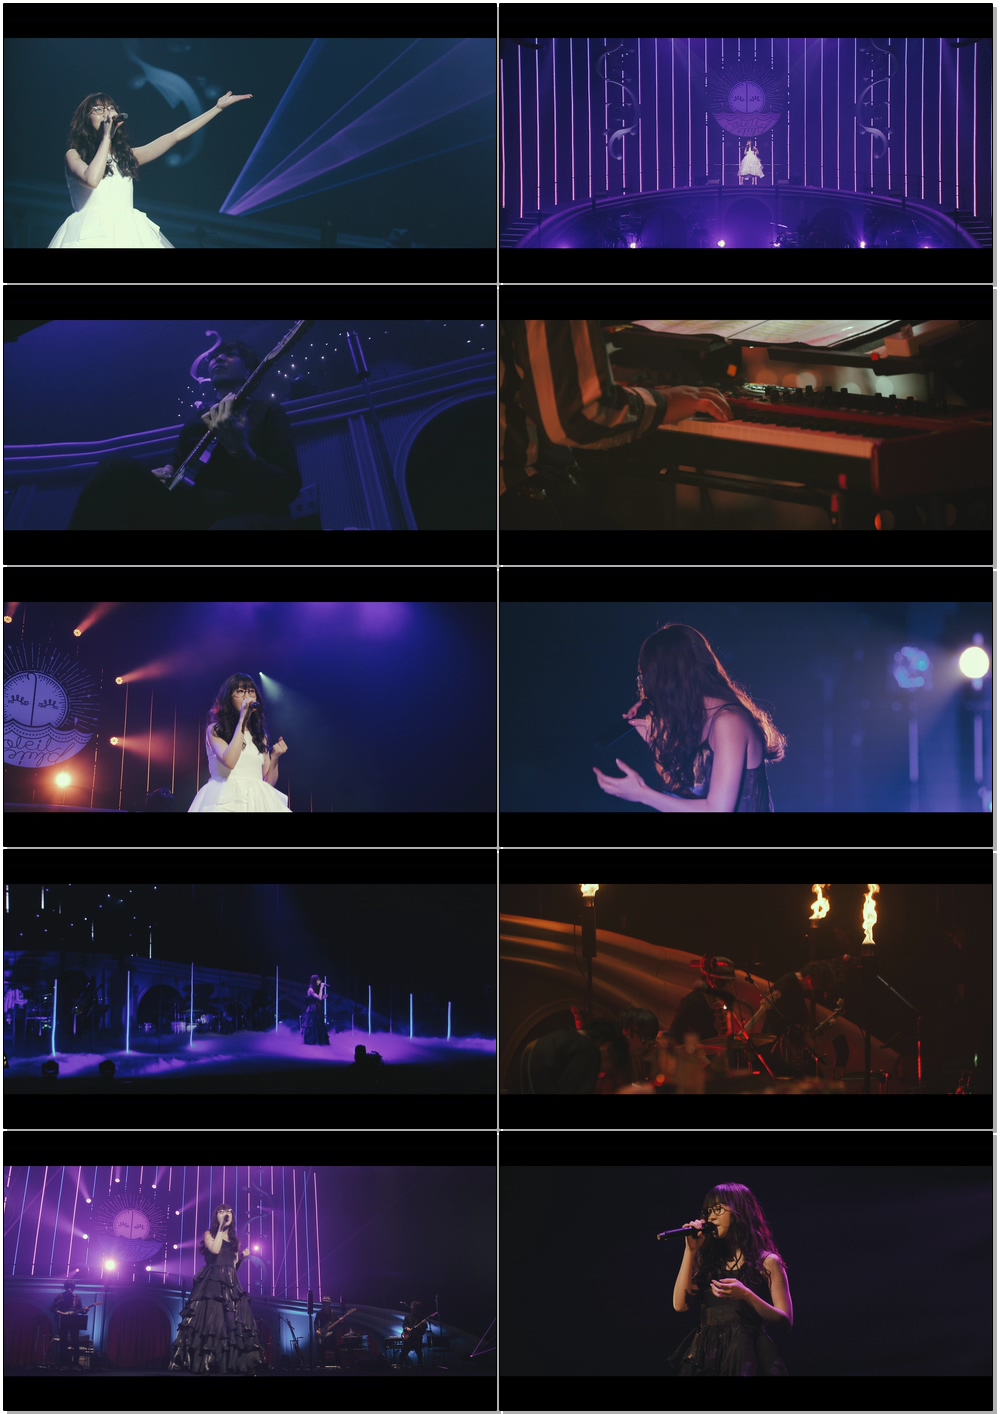 Aimer (エメ) – Aimer Hall Tour 1819 “soleil et pluie”太阳雨演唱会 (2019) 1080P蓝光原盘 [BDMV 21.8G]Blu-ray、日本演唱会、蓝光演唱会4